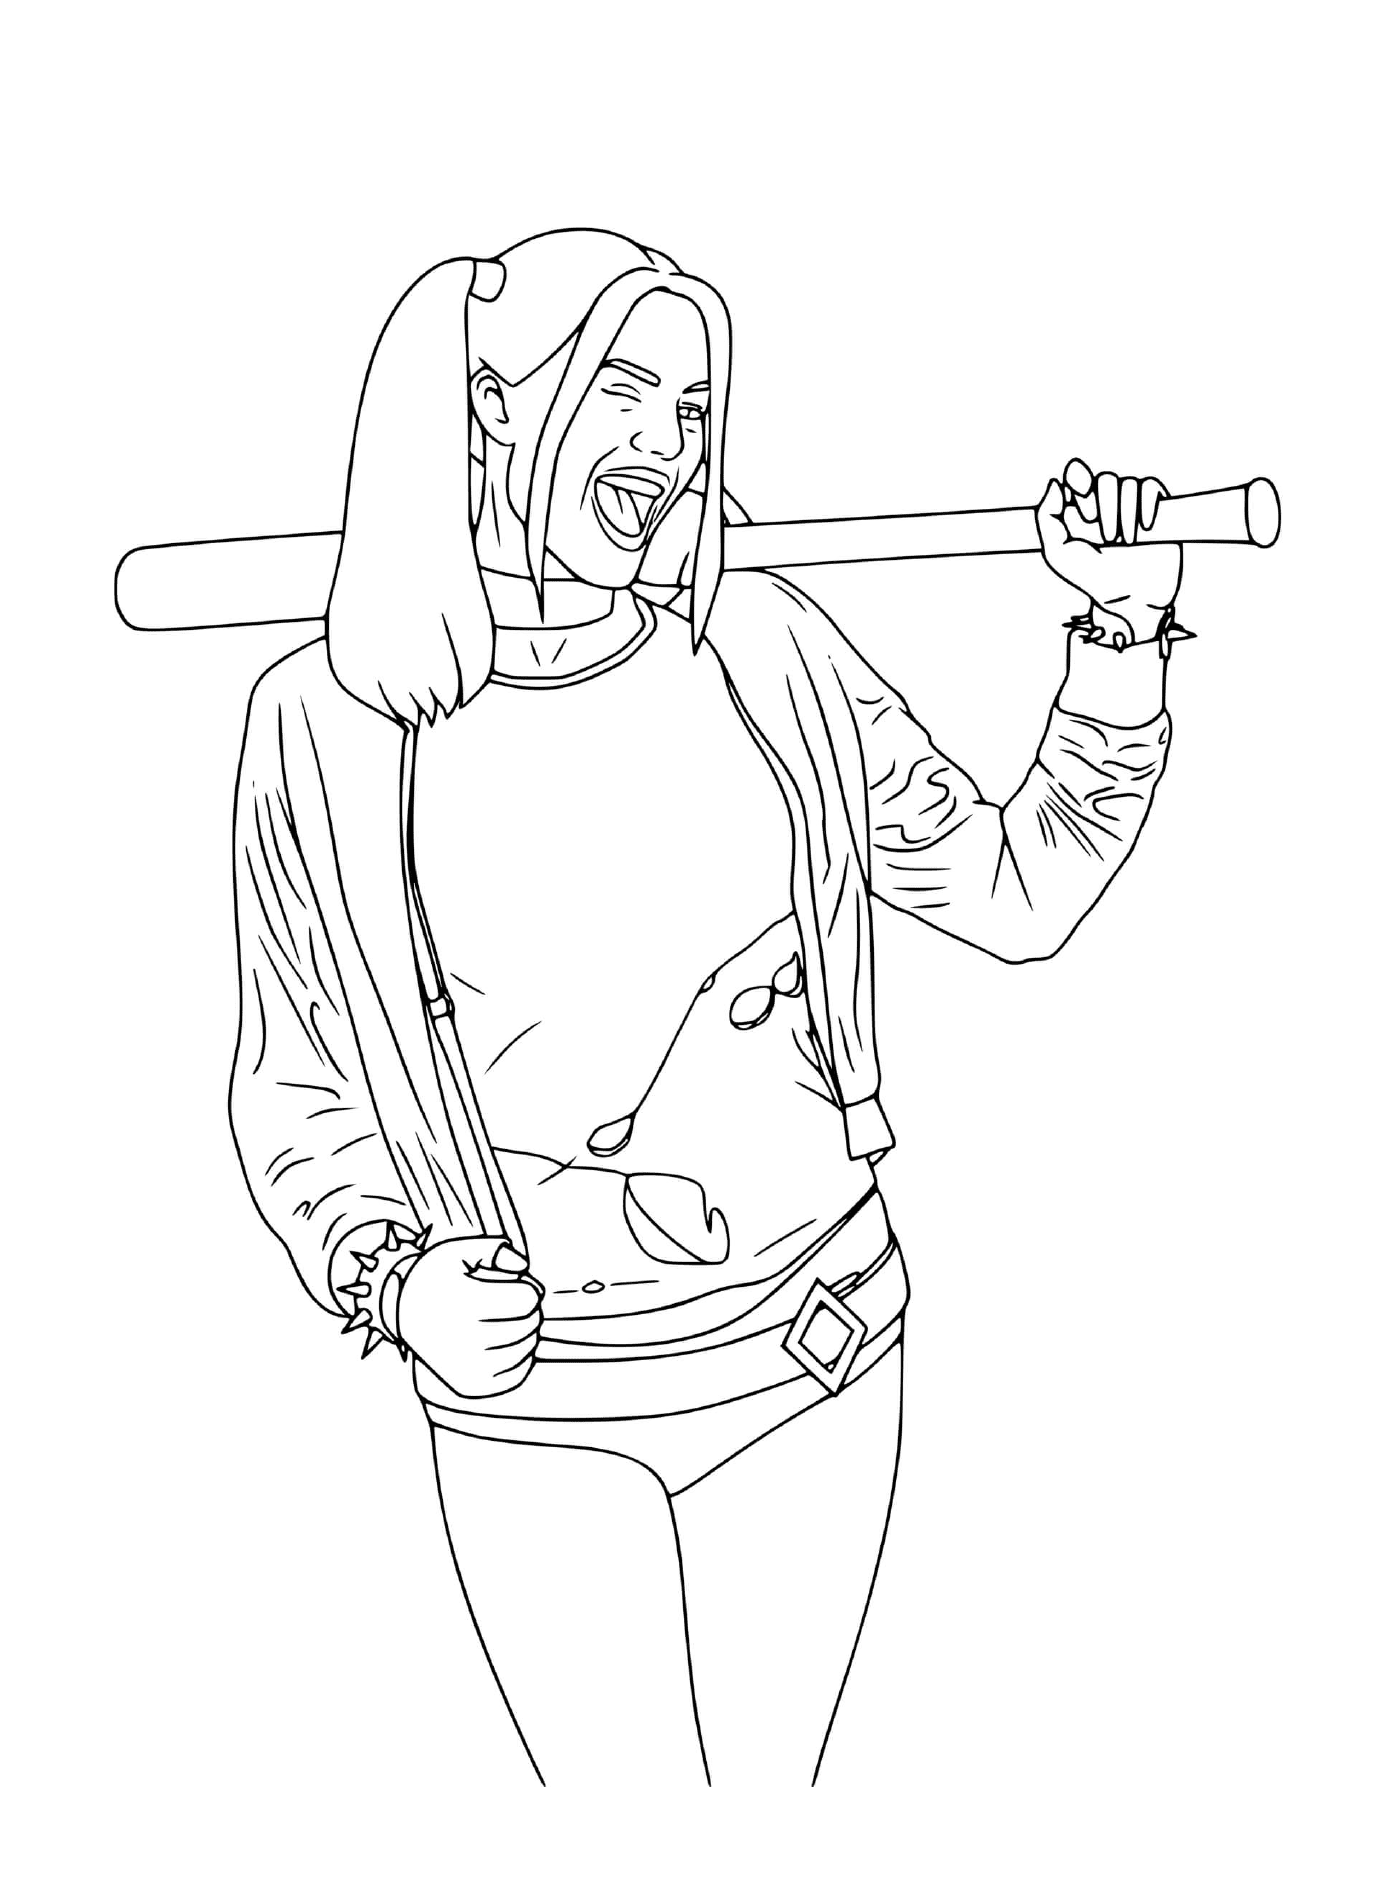  Woman holding a baseball bat 